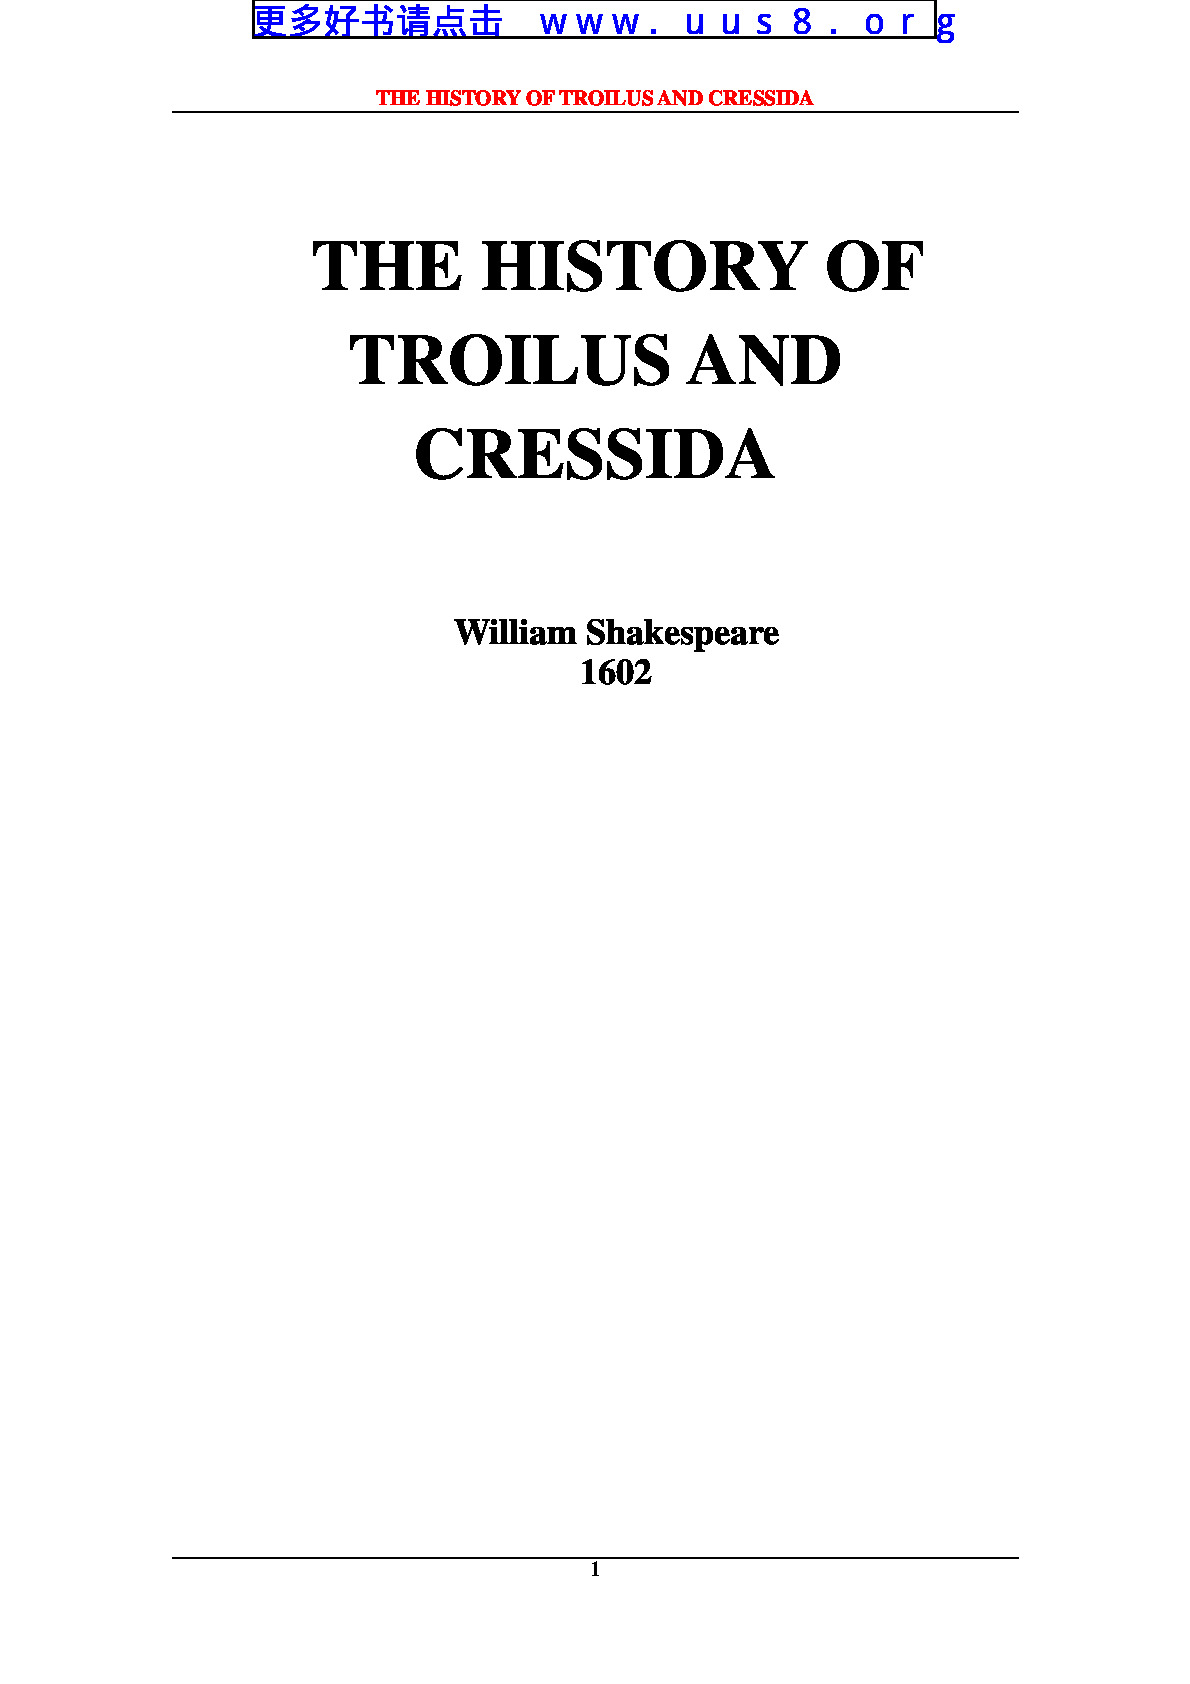 History_of_Troilus_and_Cressida(特洛埃勒斯与克雷雪达)